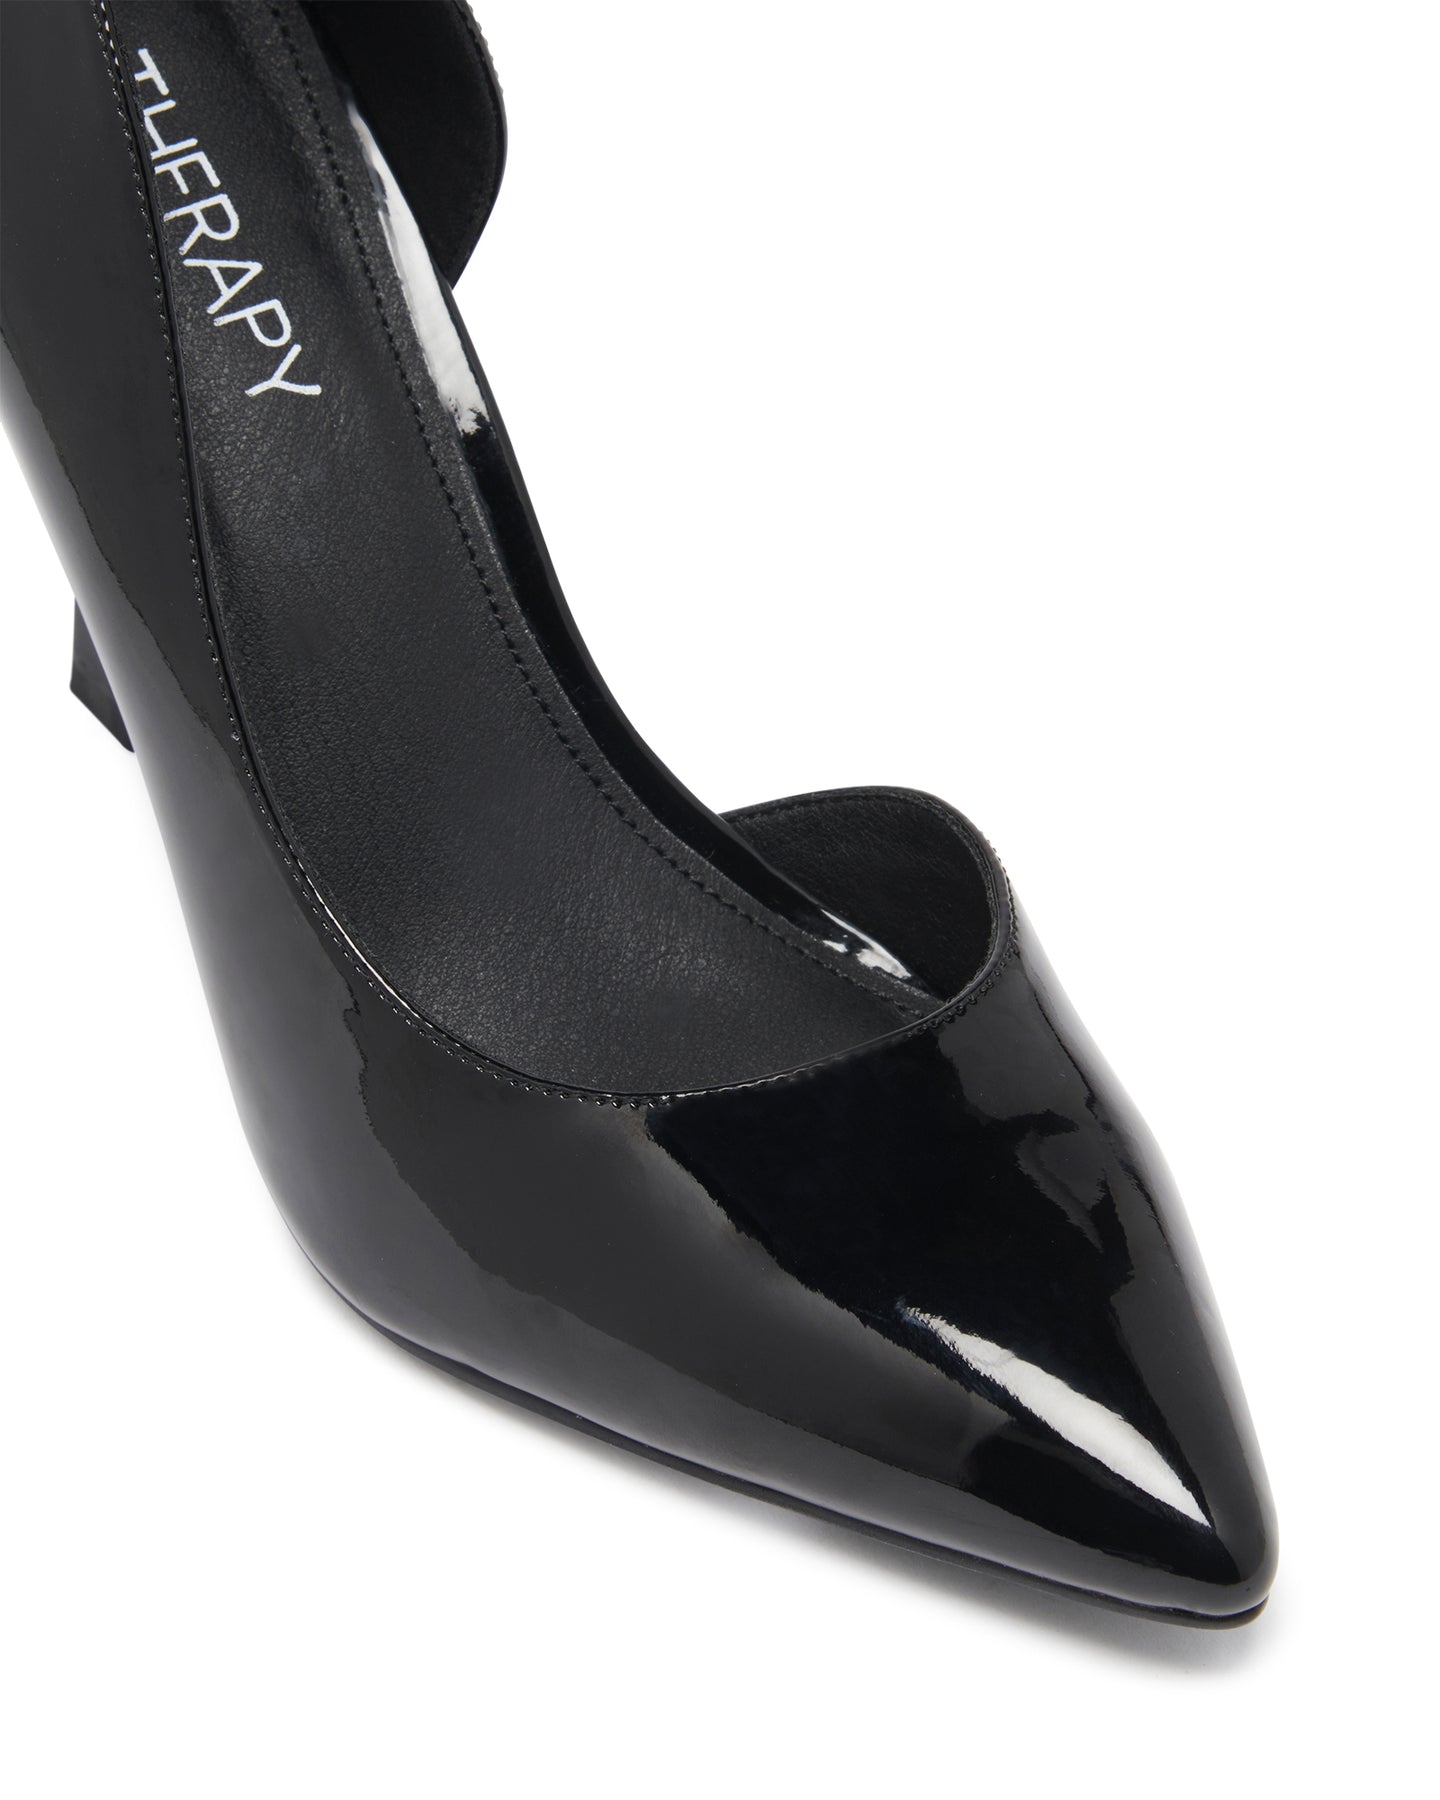 AK MC Women's high heels in black patent leather - Alexander Kraft Monte  Carlo